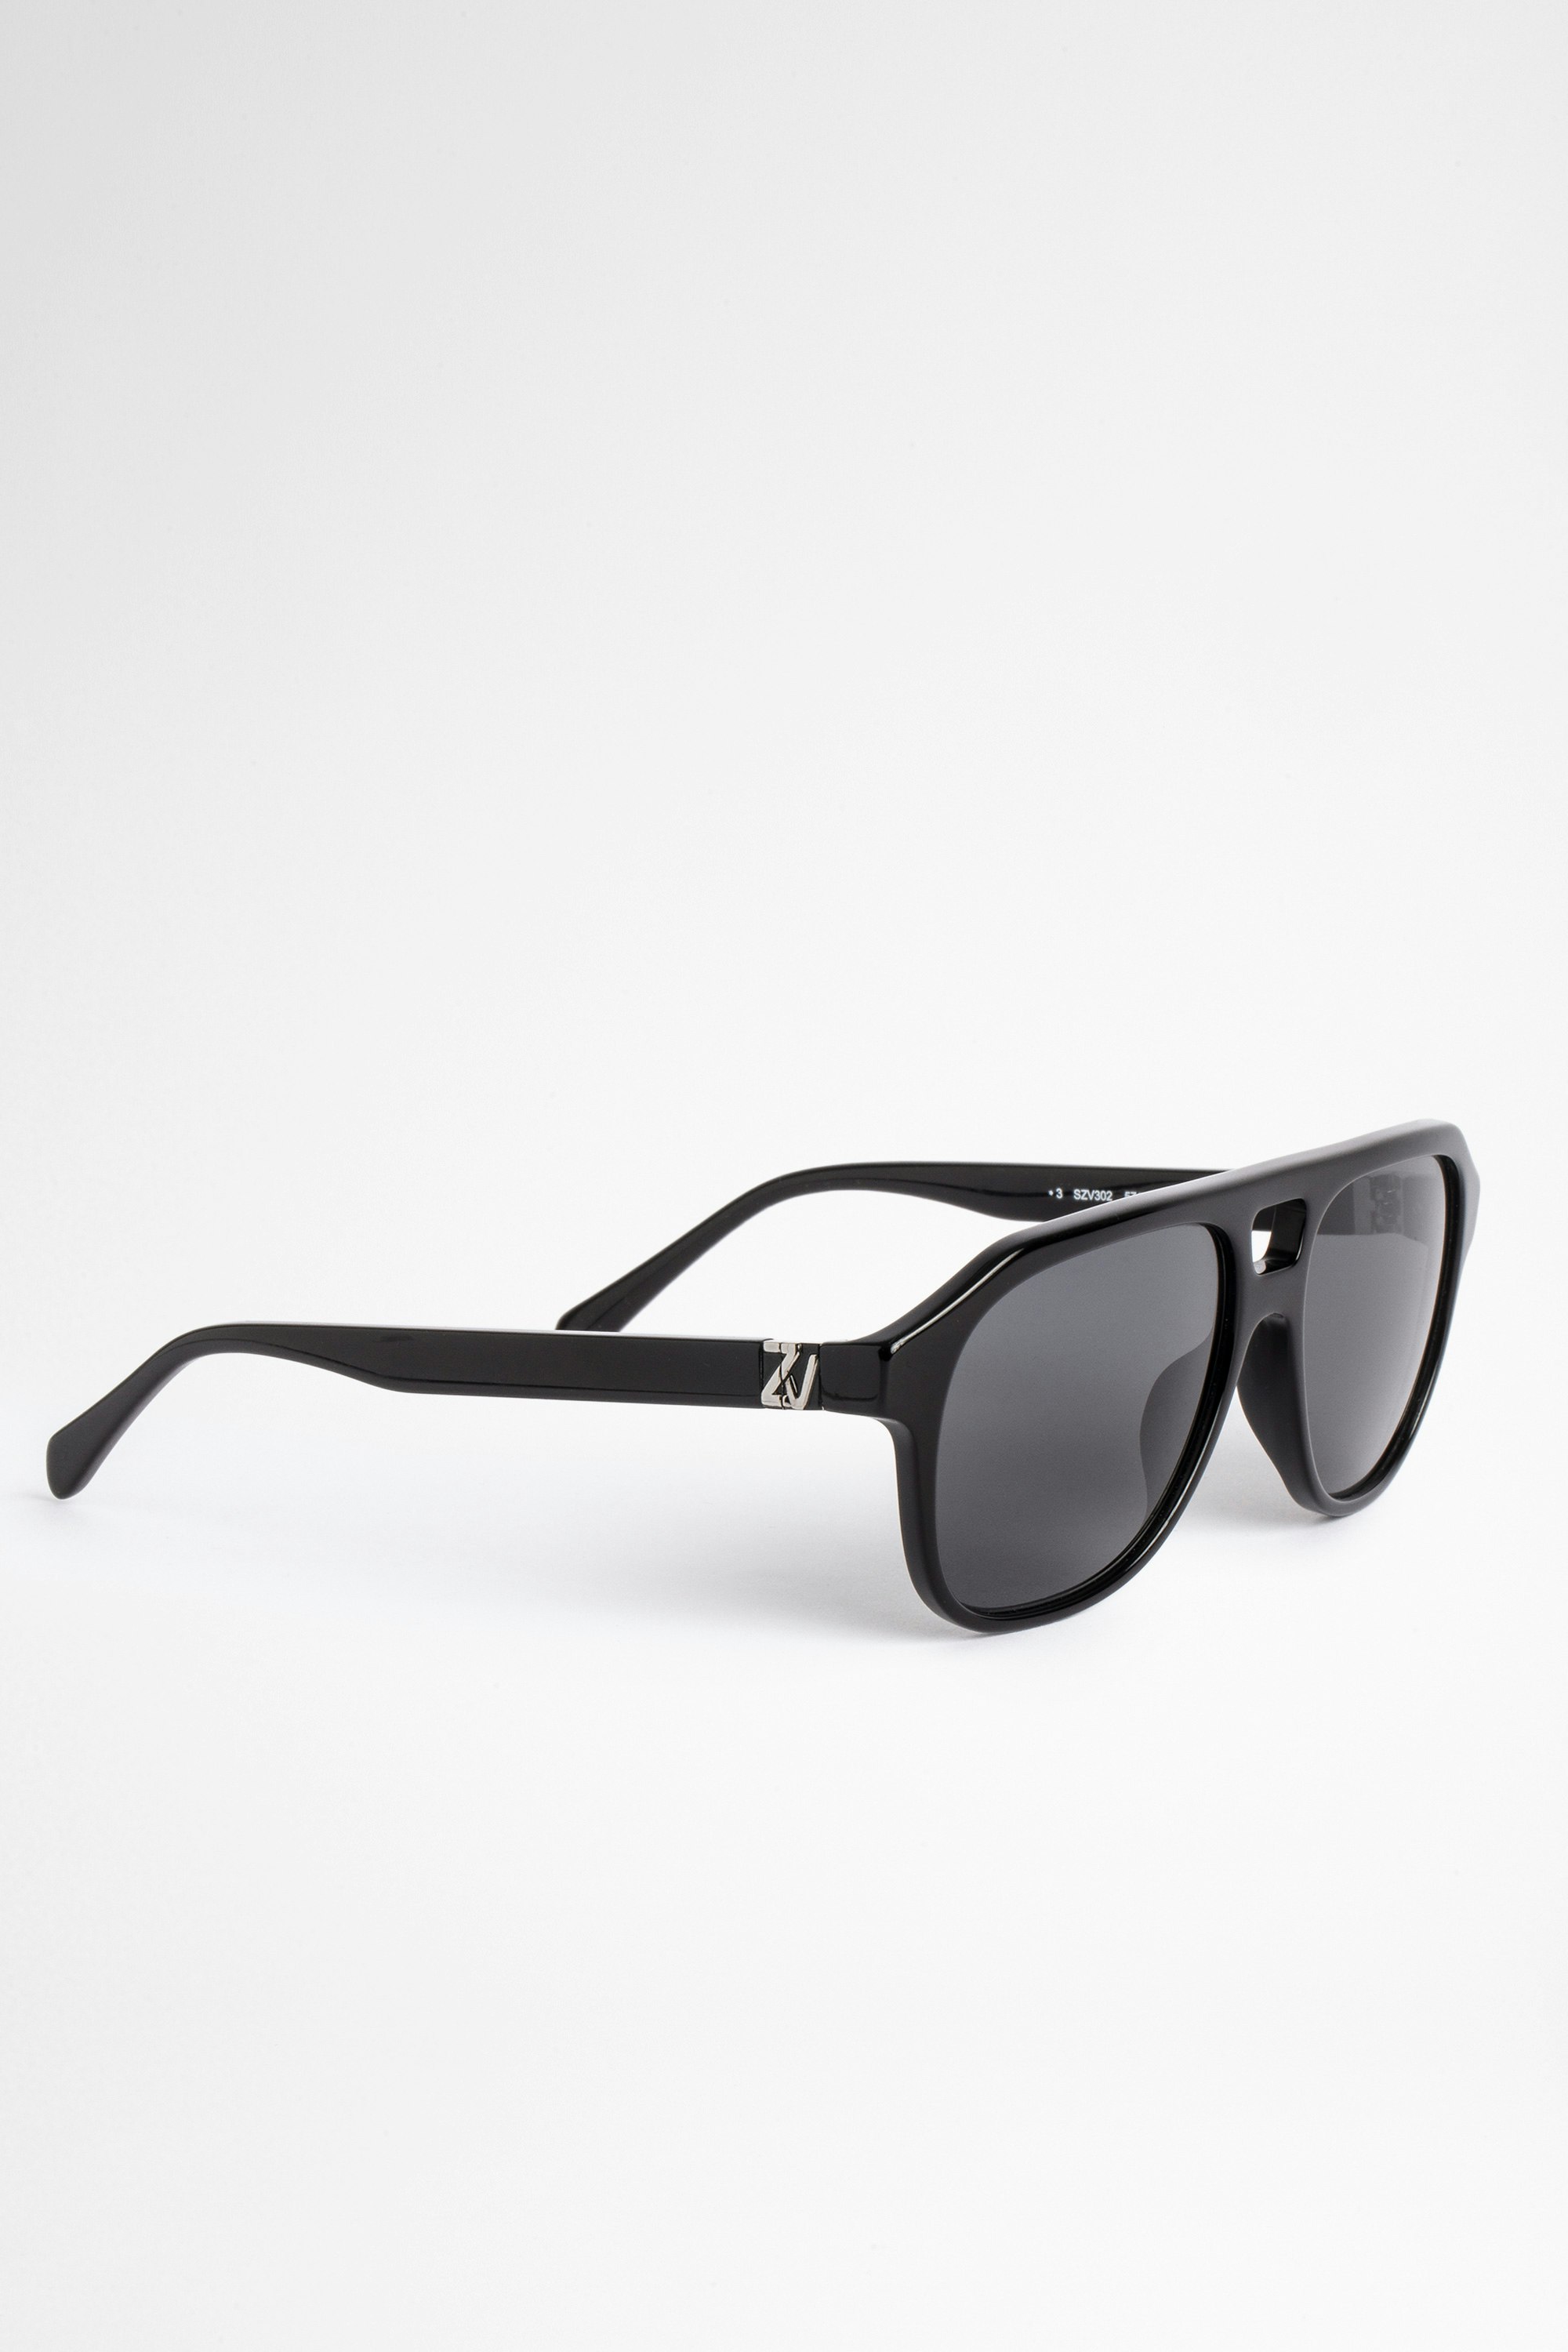 Occhiali Shiny Zadig&Volatire unisex acetate sunglasses, black color.